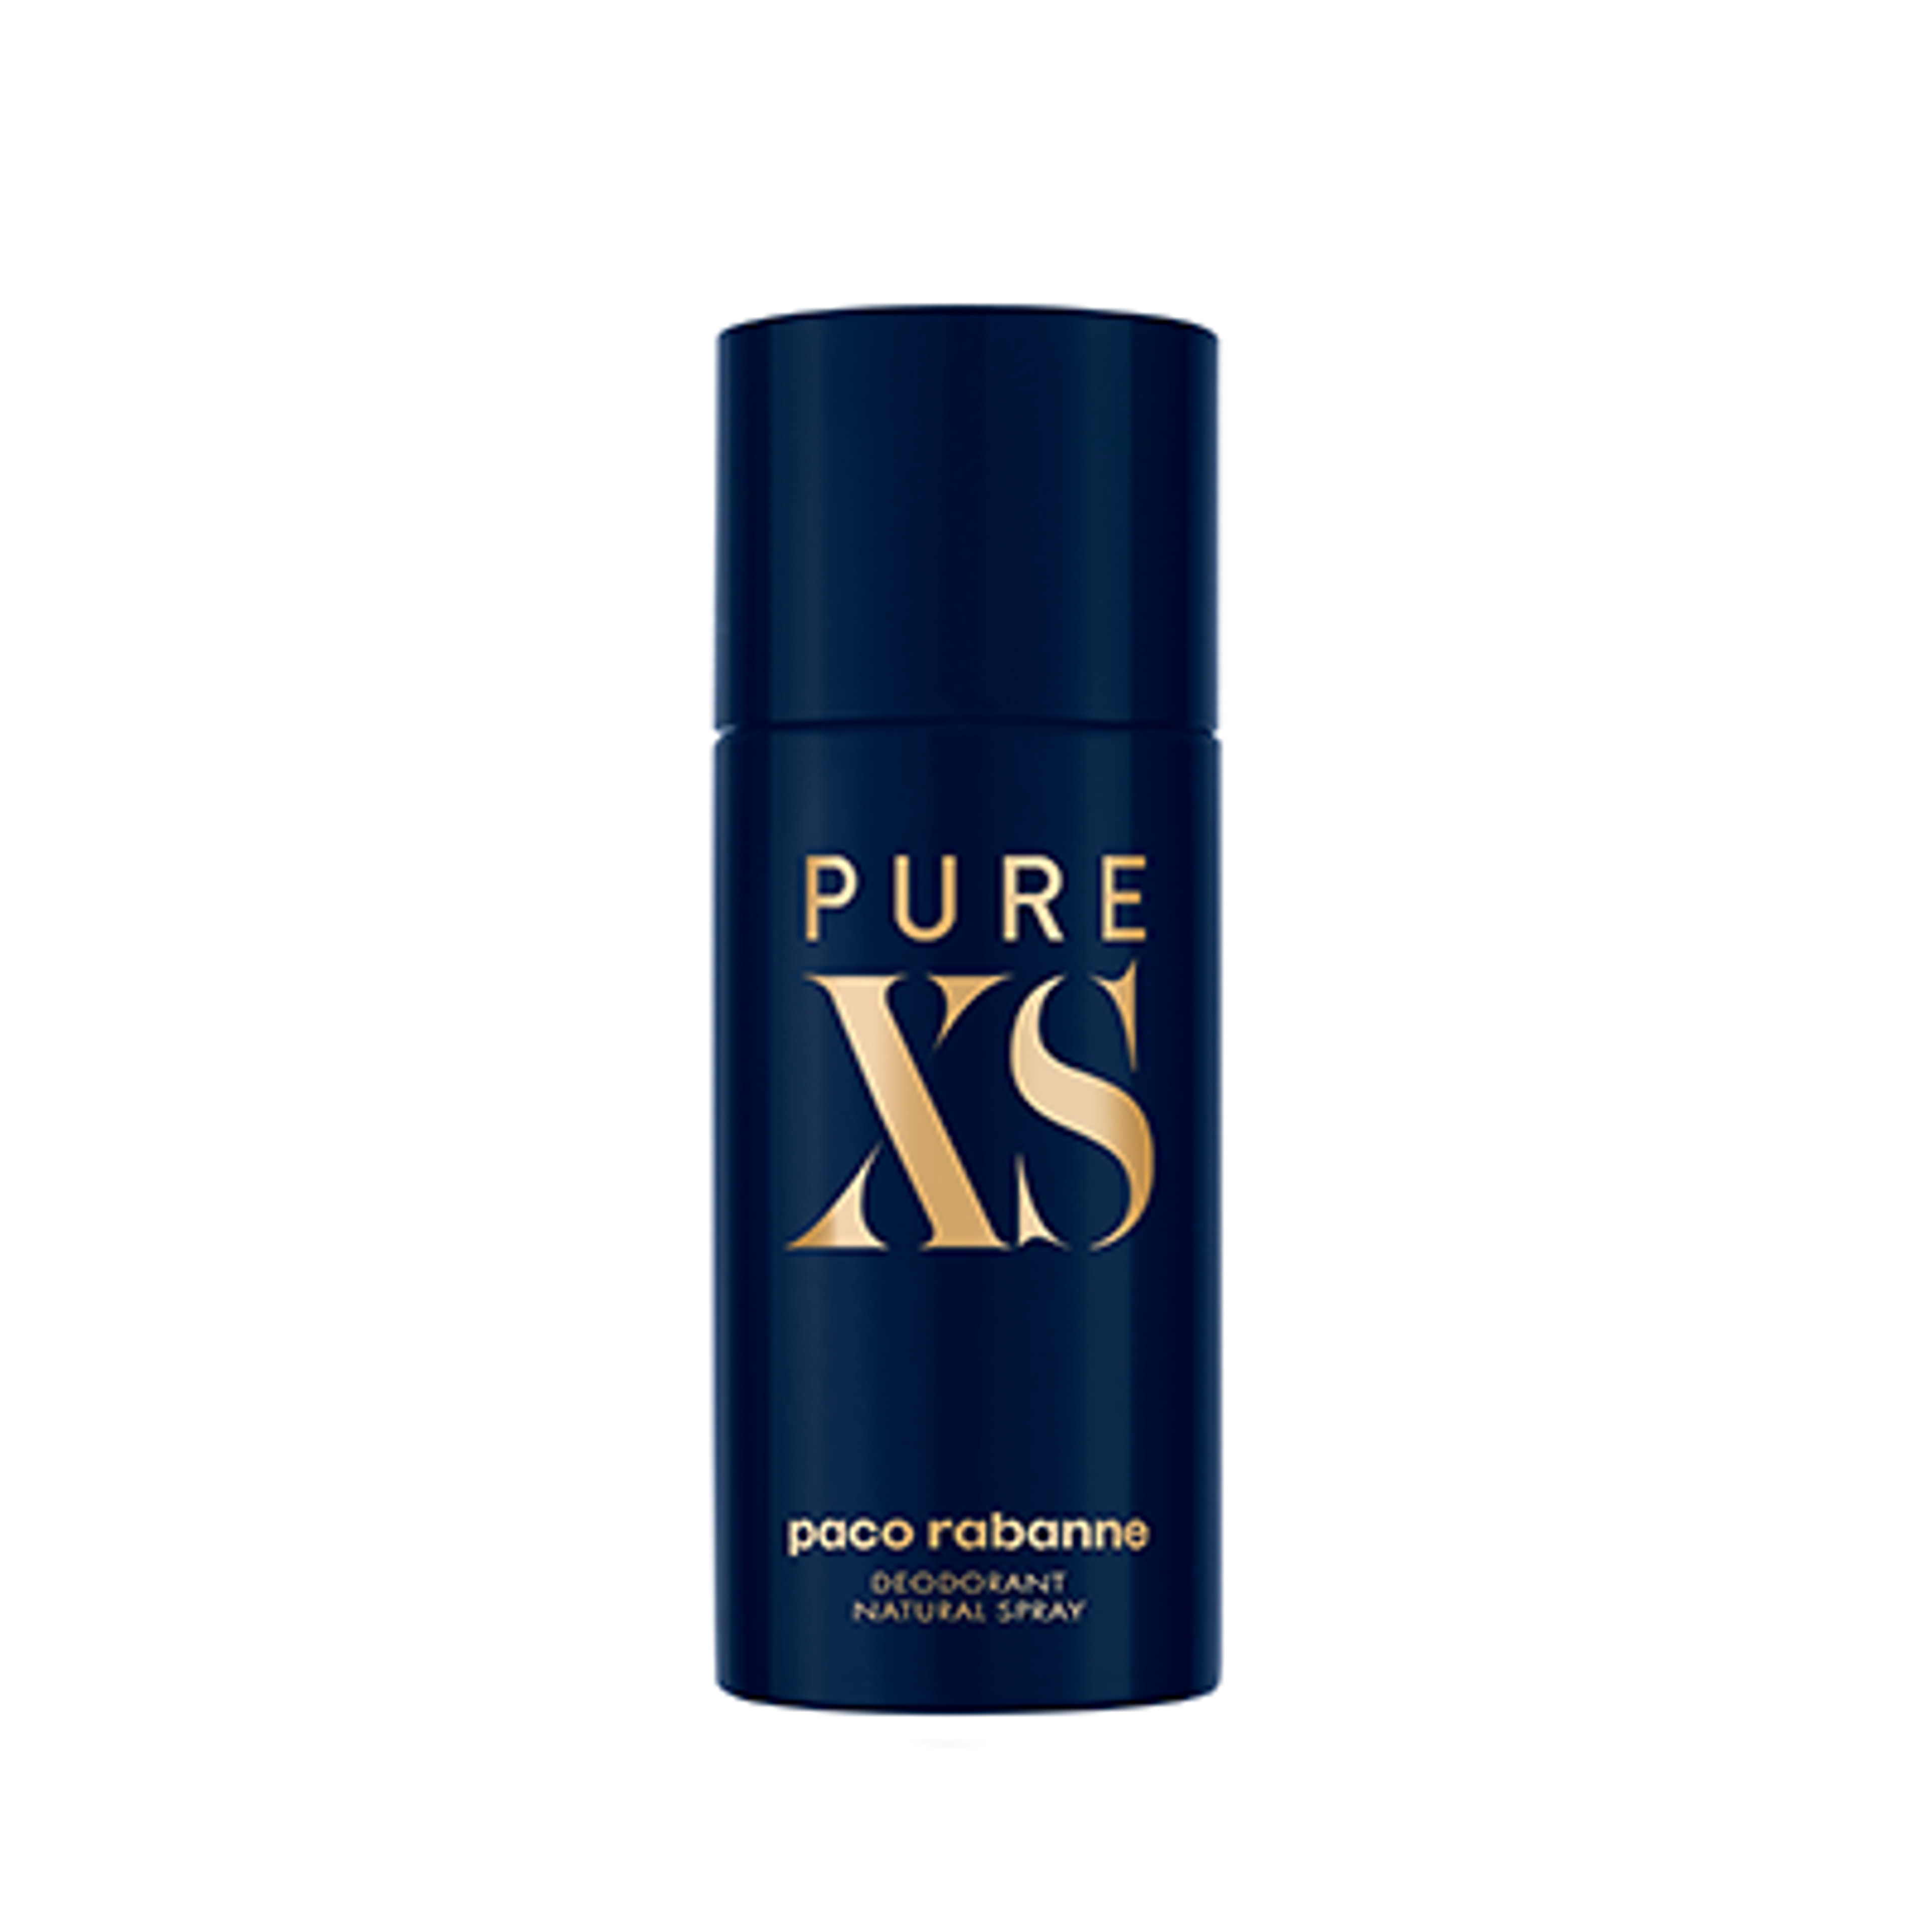 Paco Rabanne Pure Xs - Deodorant Spray 1